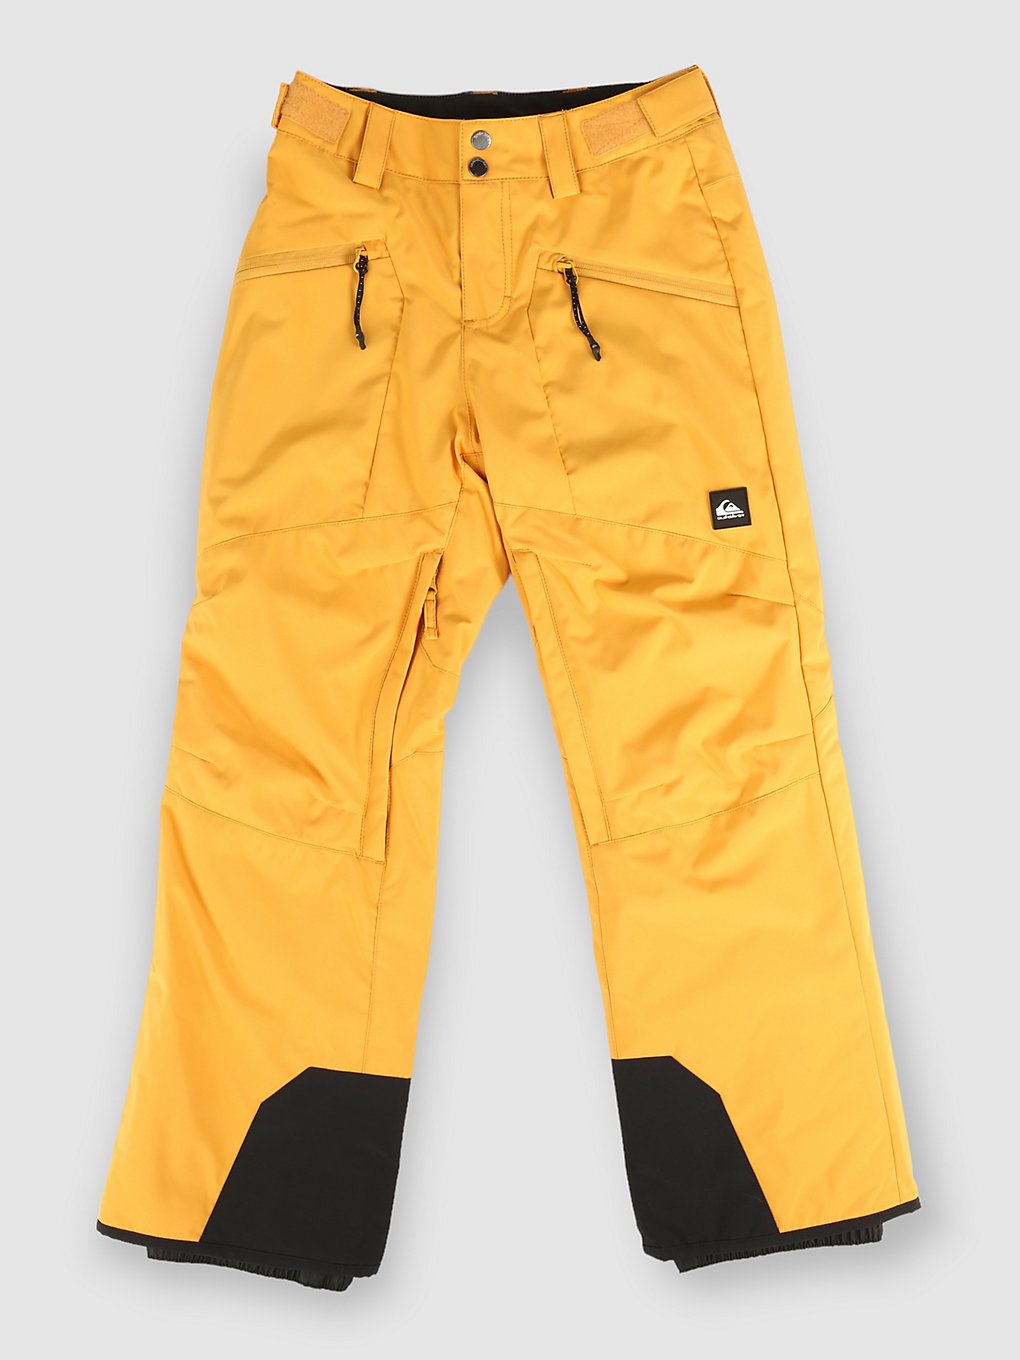 Quiksilver Boundry Pantalon jaune